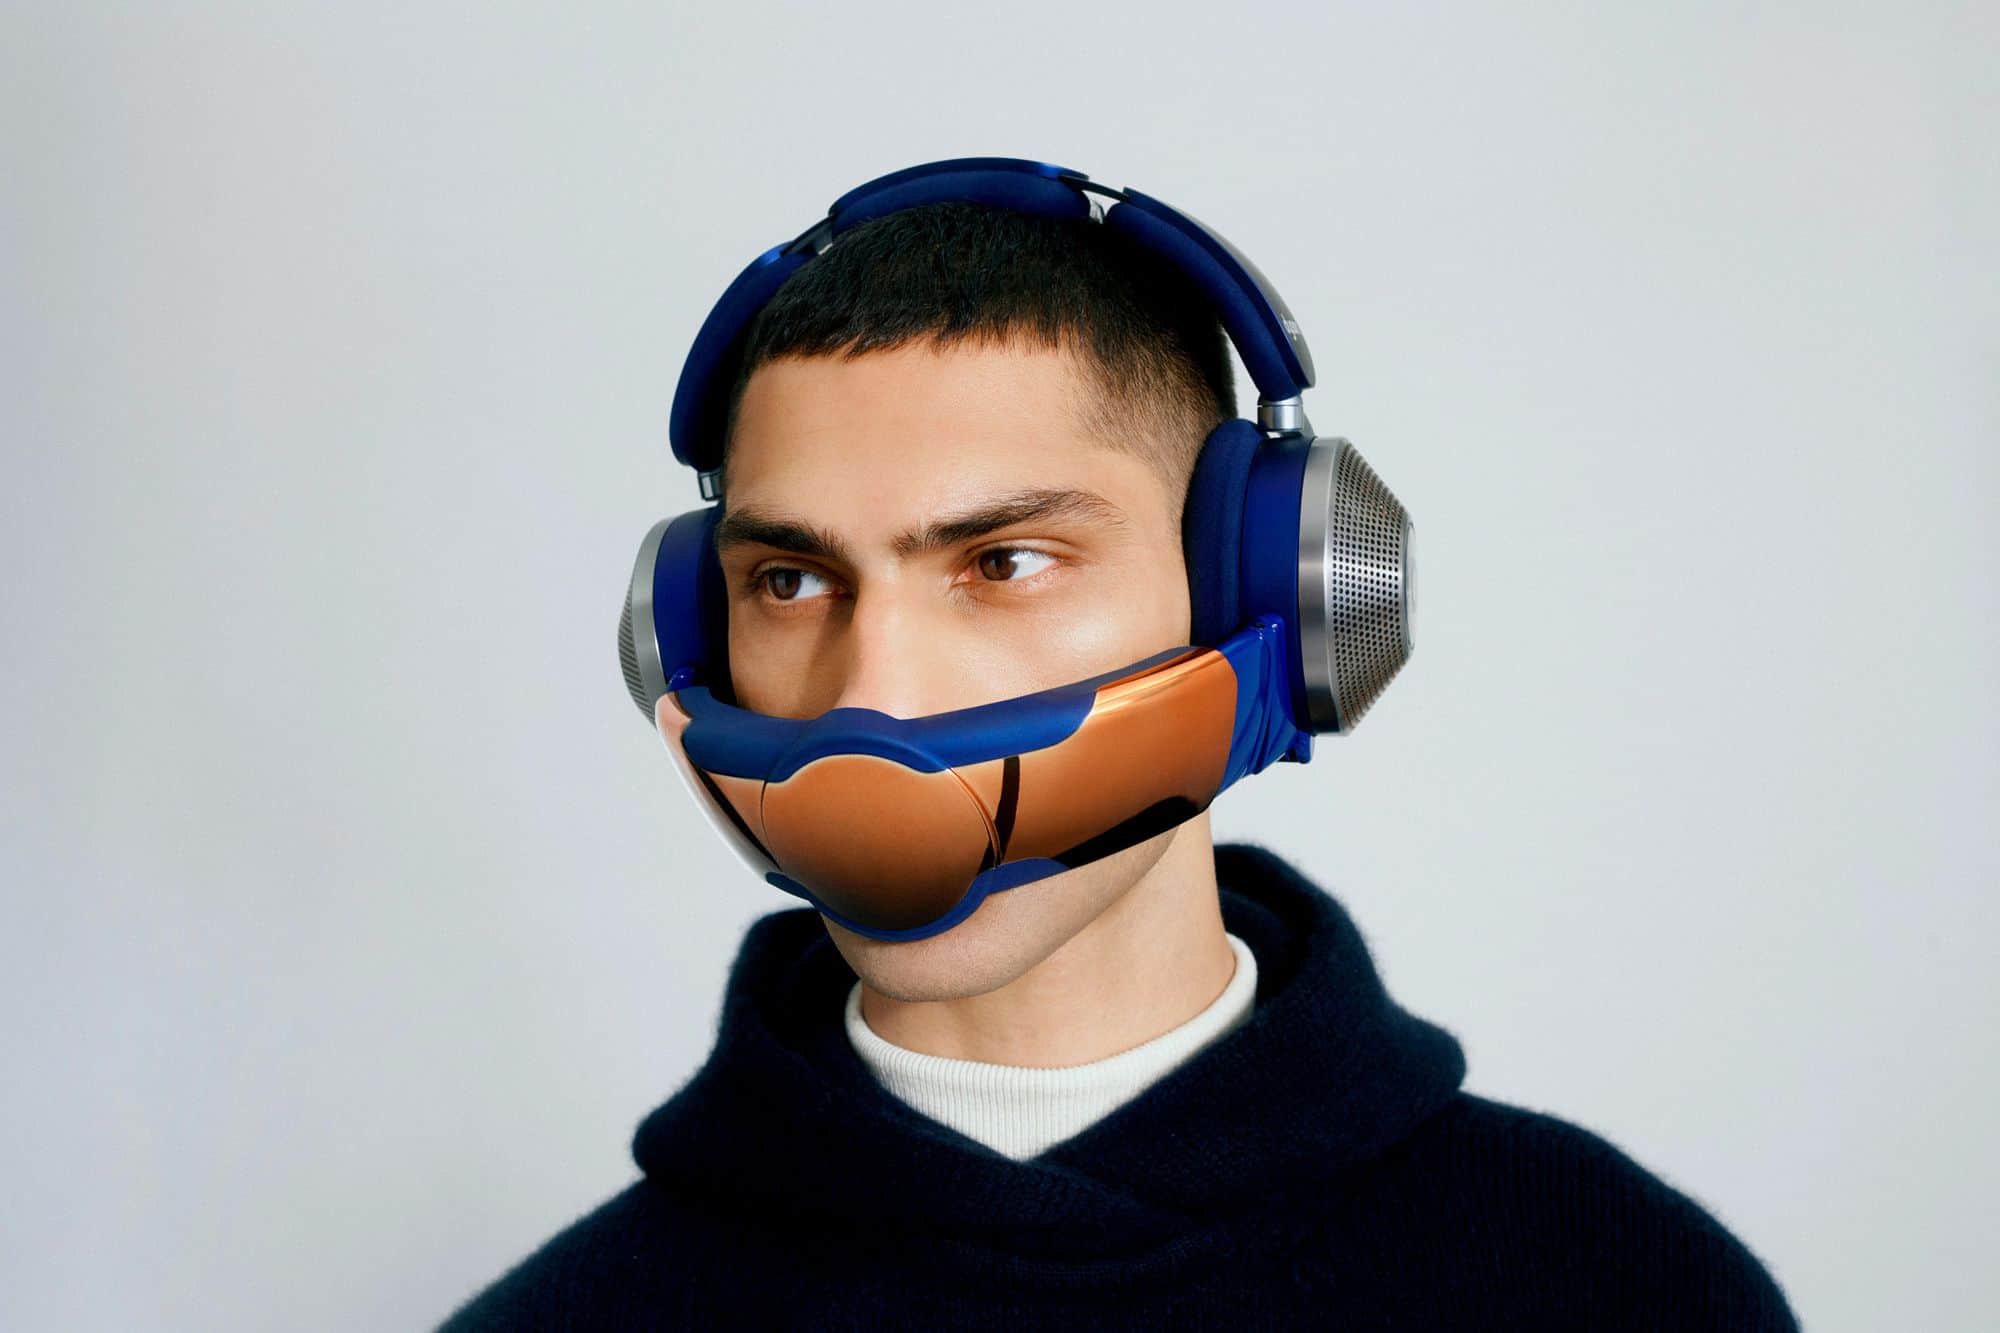 Dyson Air-purifying headphones